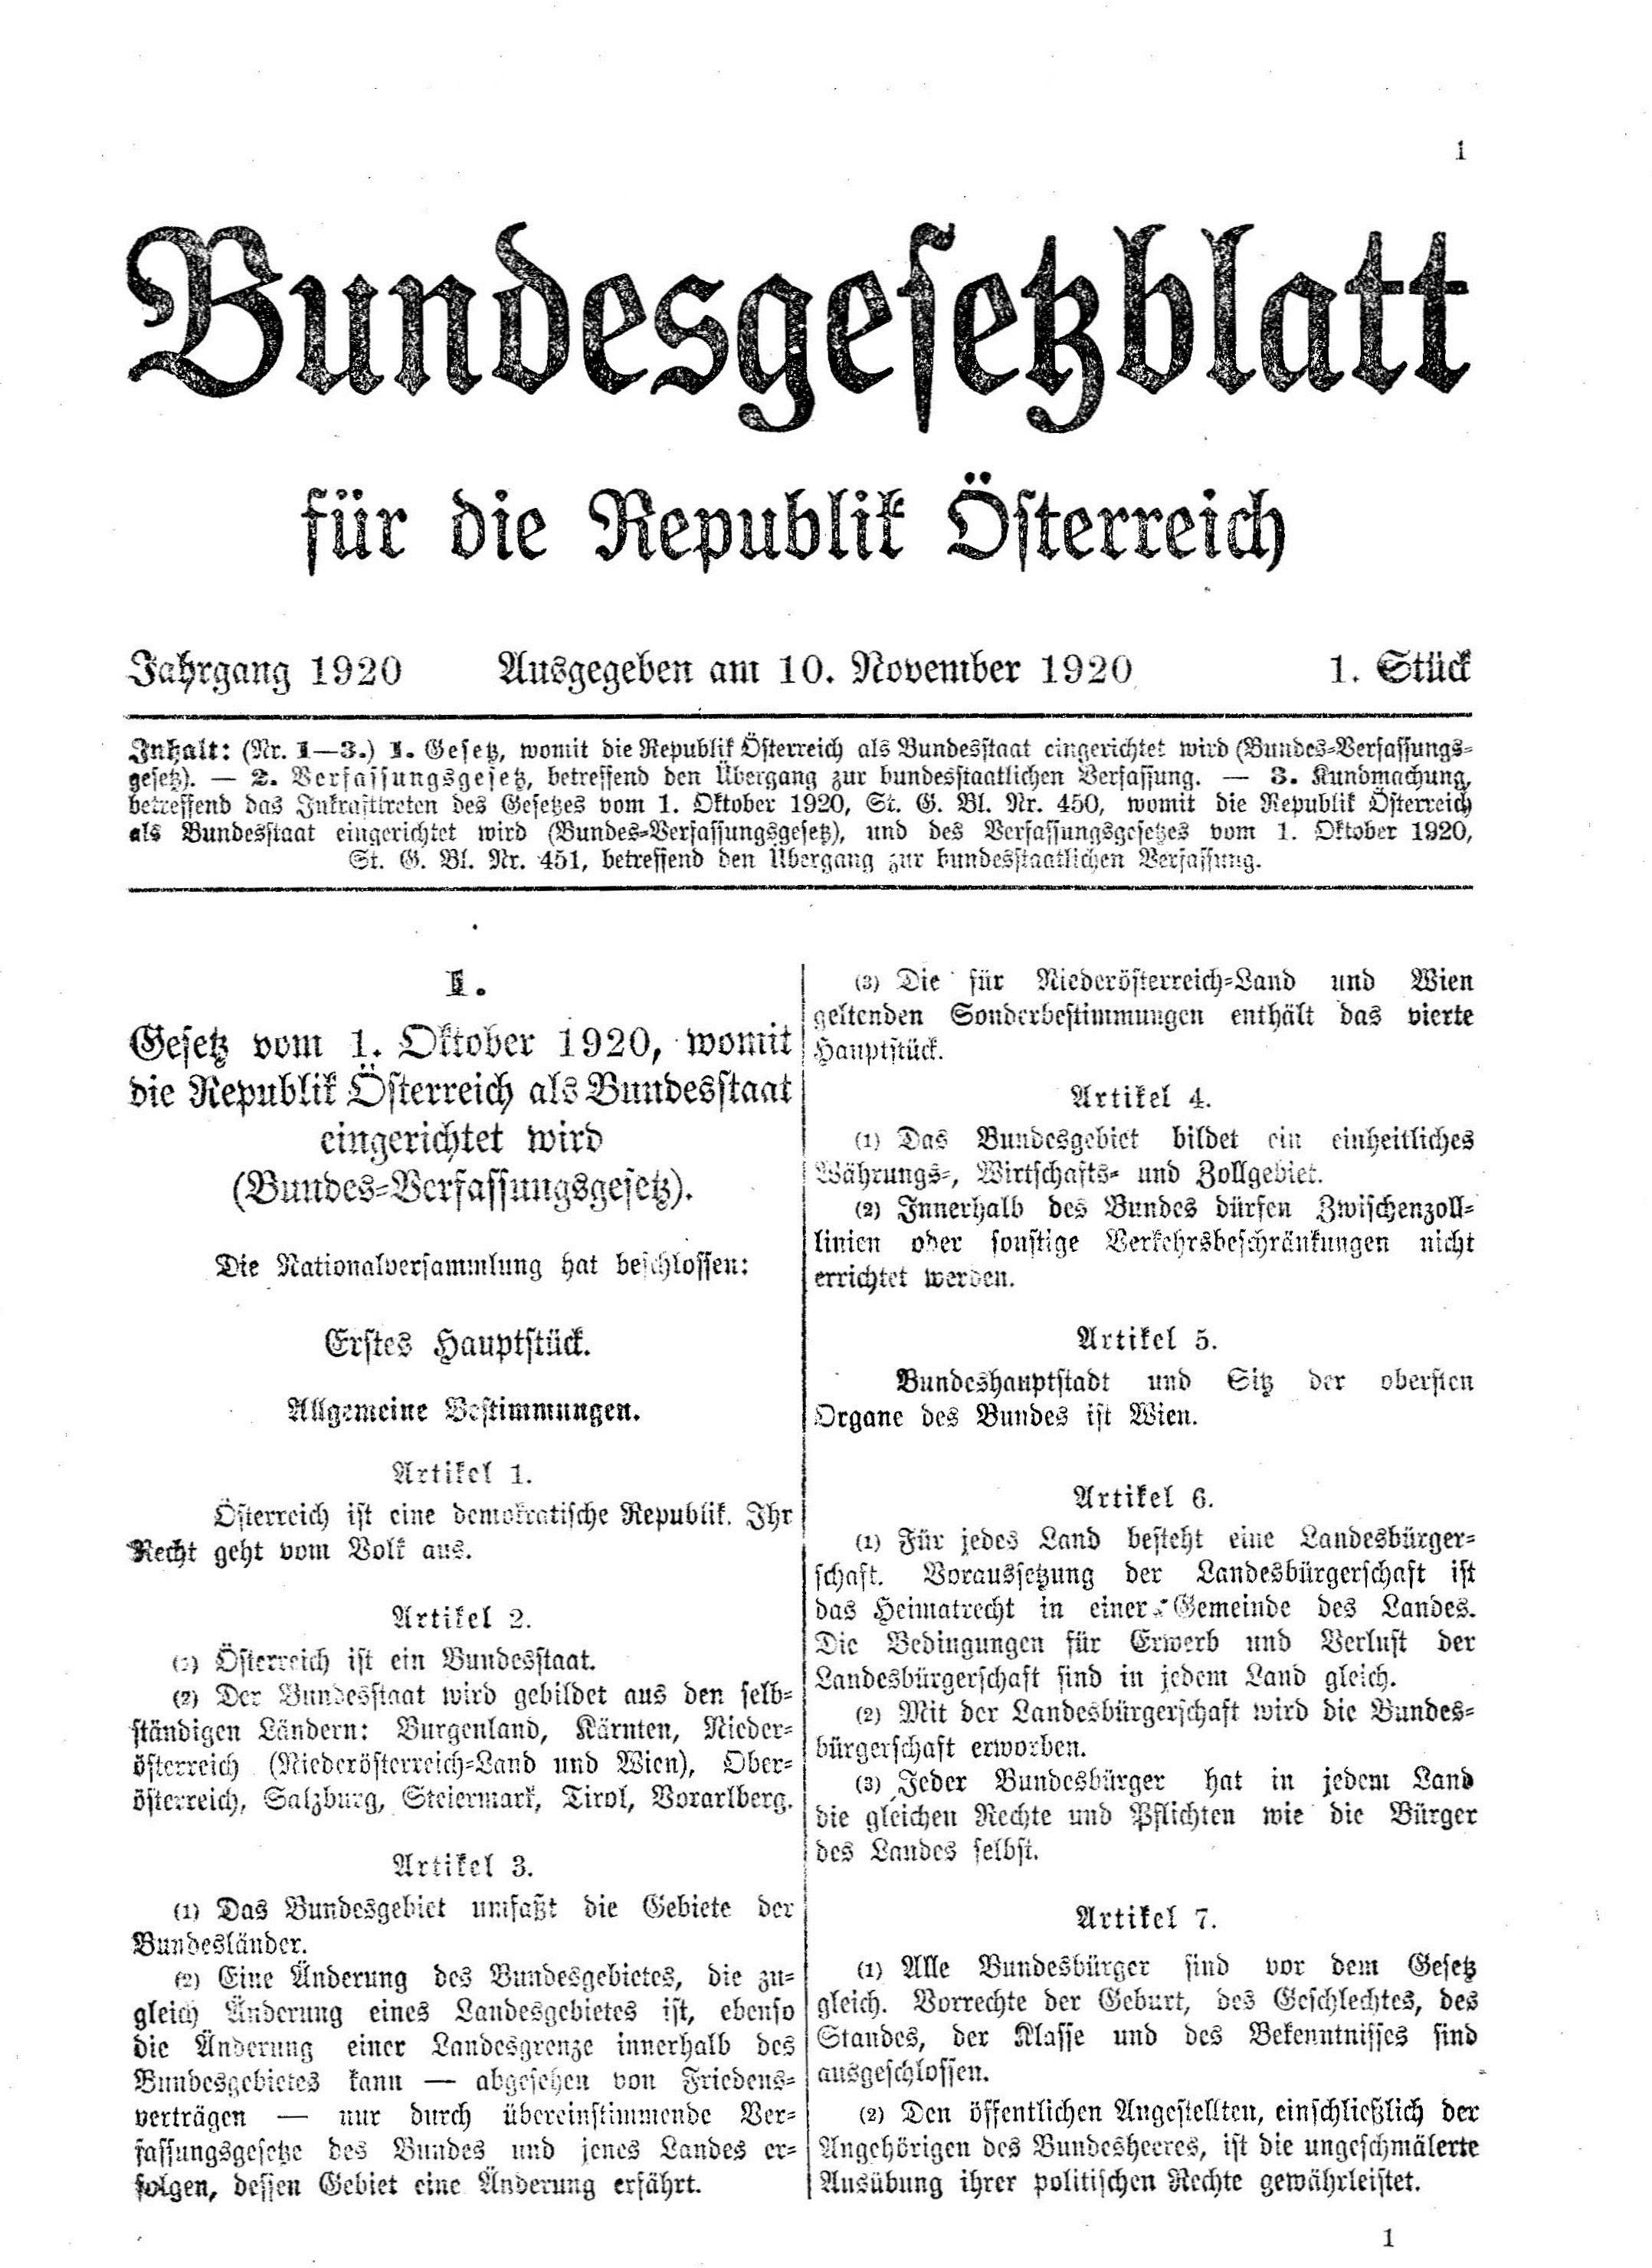 http://upload.wikimedia.org/wikipedia/commons/c/cc/Bundesgesetzblatt_%28Austria%29_1920_0001.jpg